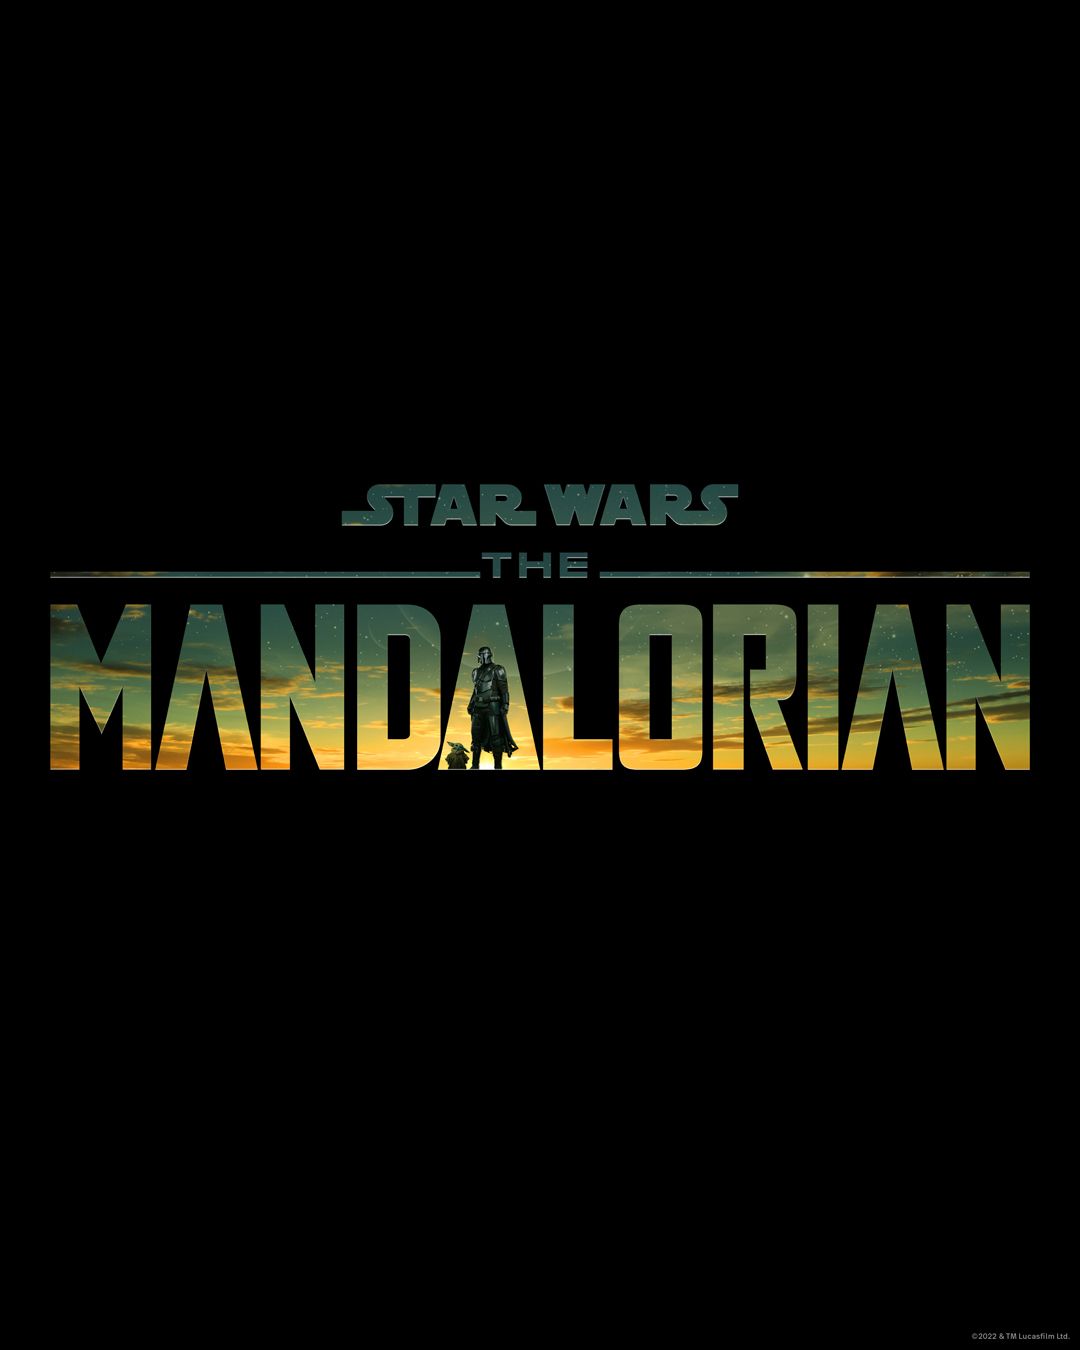 The Mandalorian Season 3 Poster Shows First Look At Grogu & Din's Return